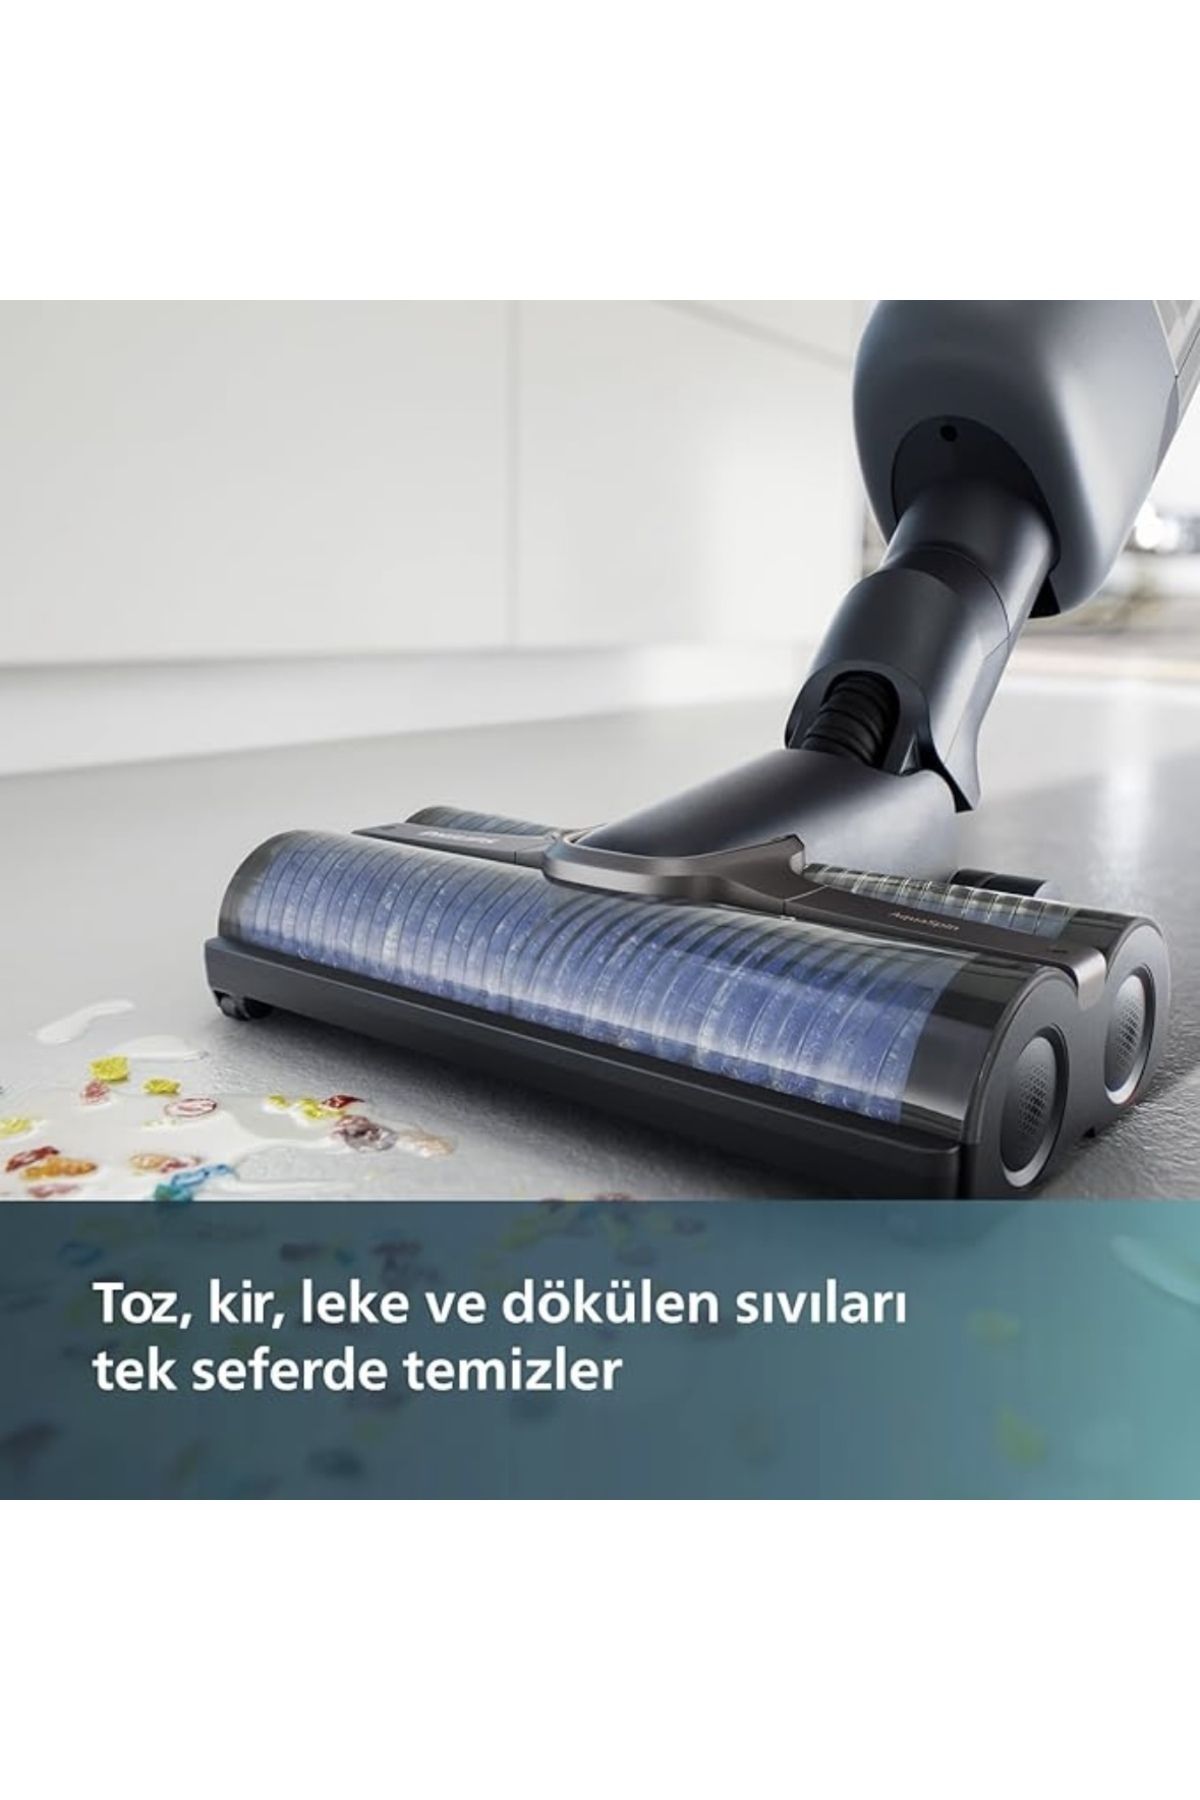 Philips AquaTrio Islak & Kuru Temizlik Kablosuz Premium Dikey Süpürge 7000 Serisi, 180 m²'ye Kadar Temizlik